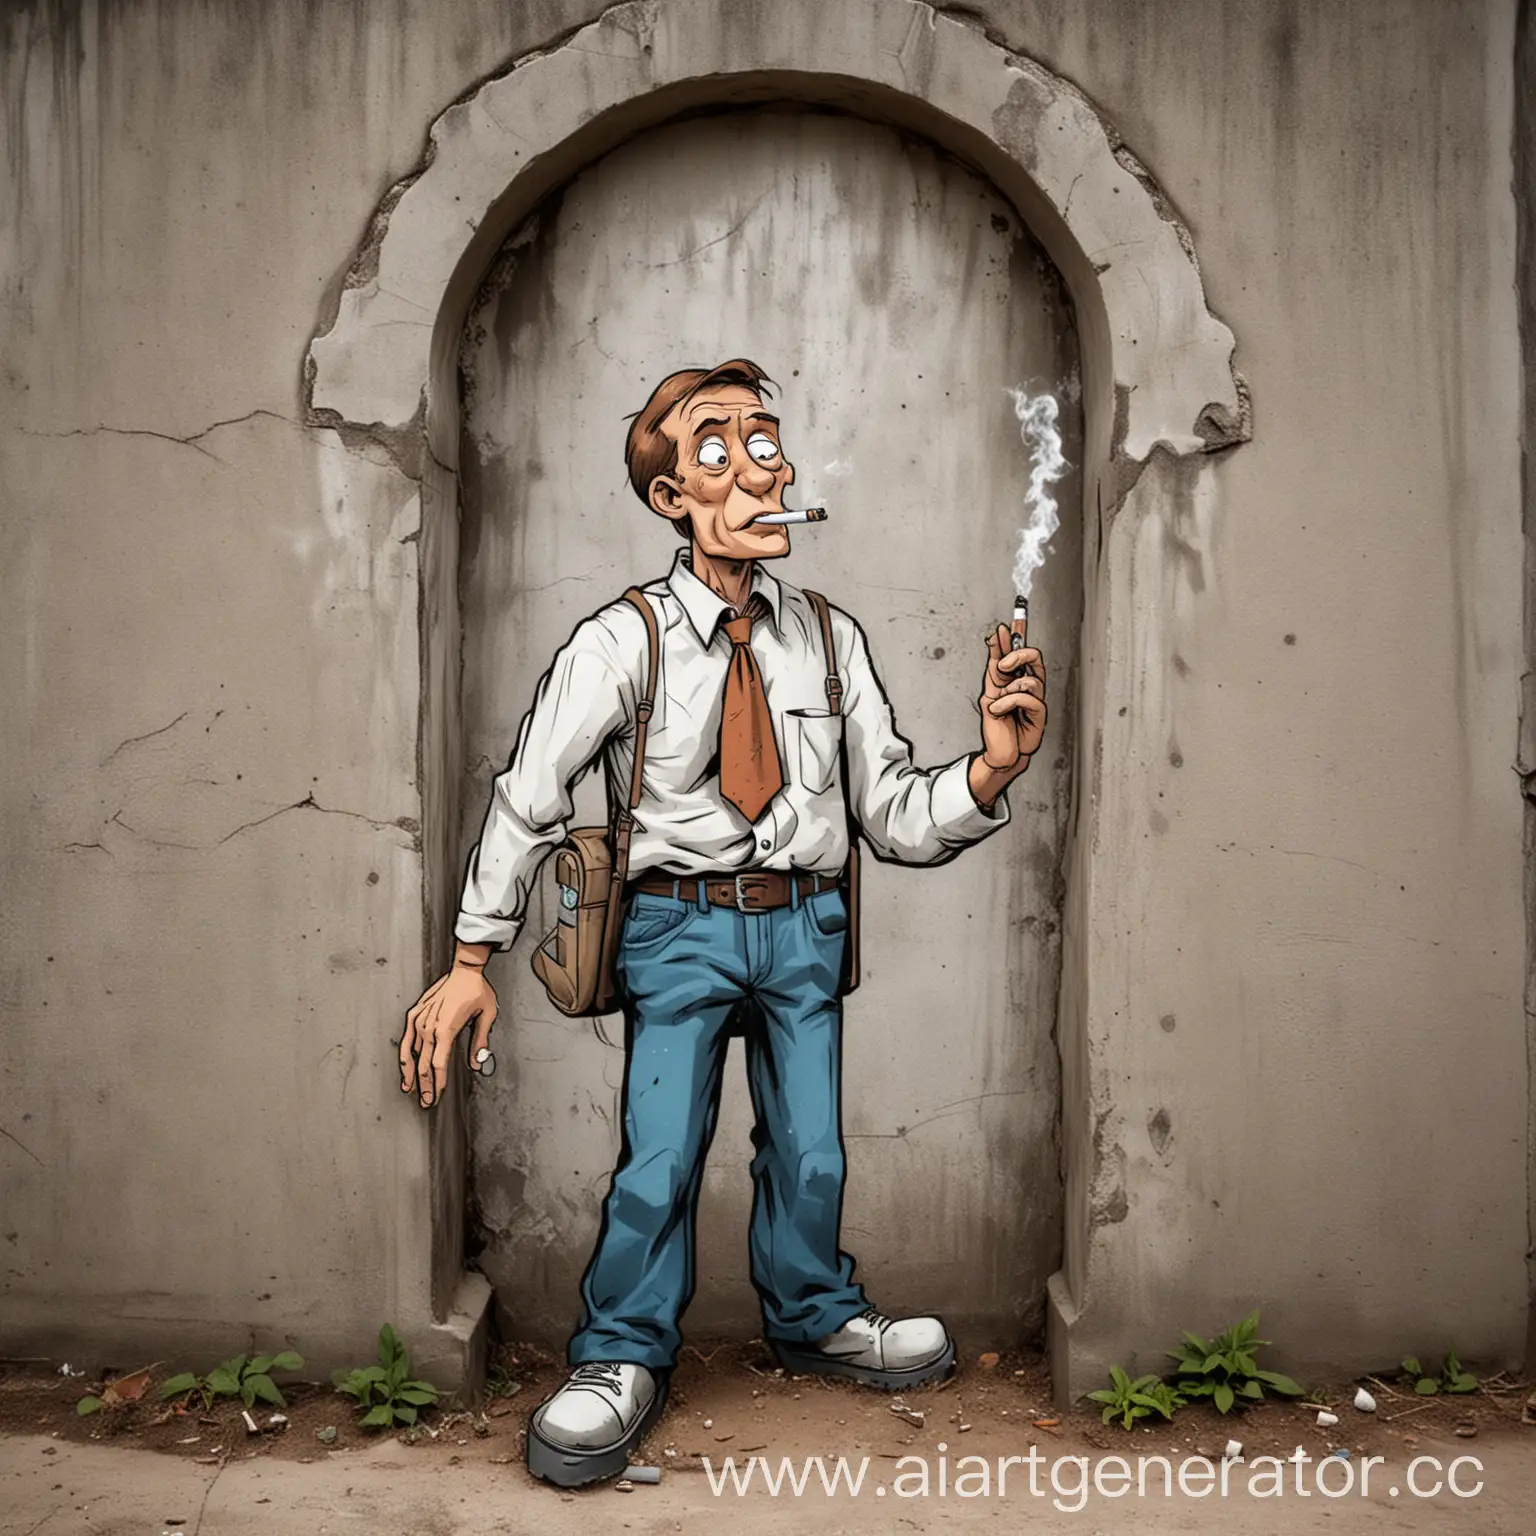 Cartoon-Cigarette-Leading-Person-to-the-Grave-Mural